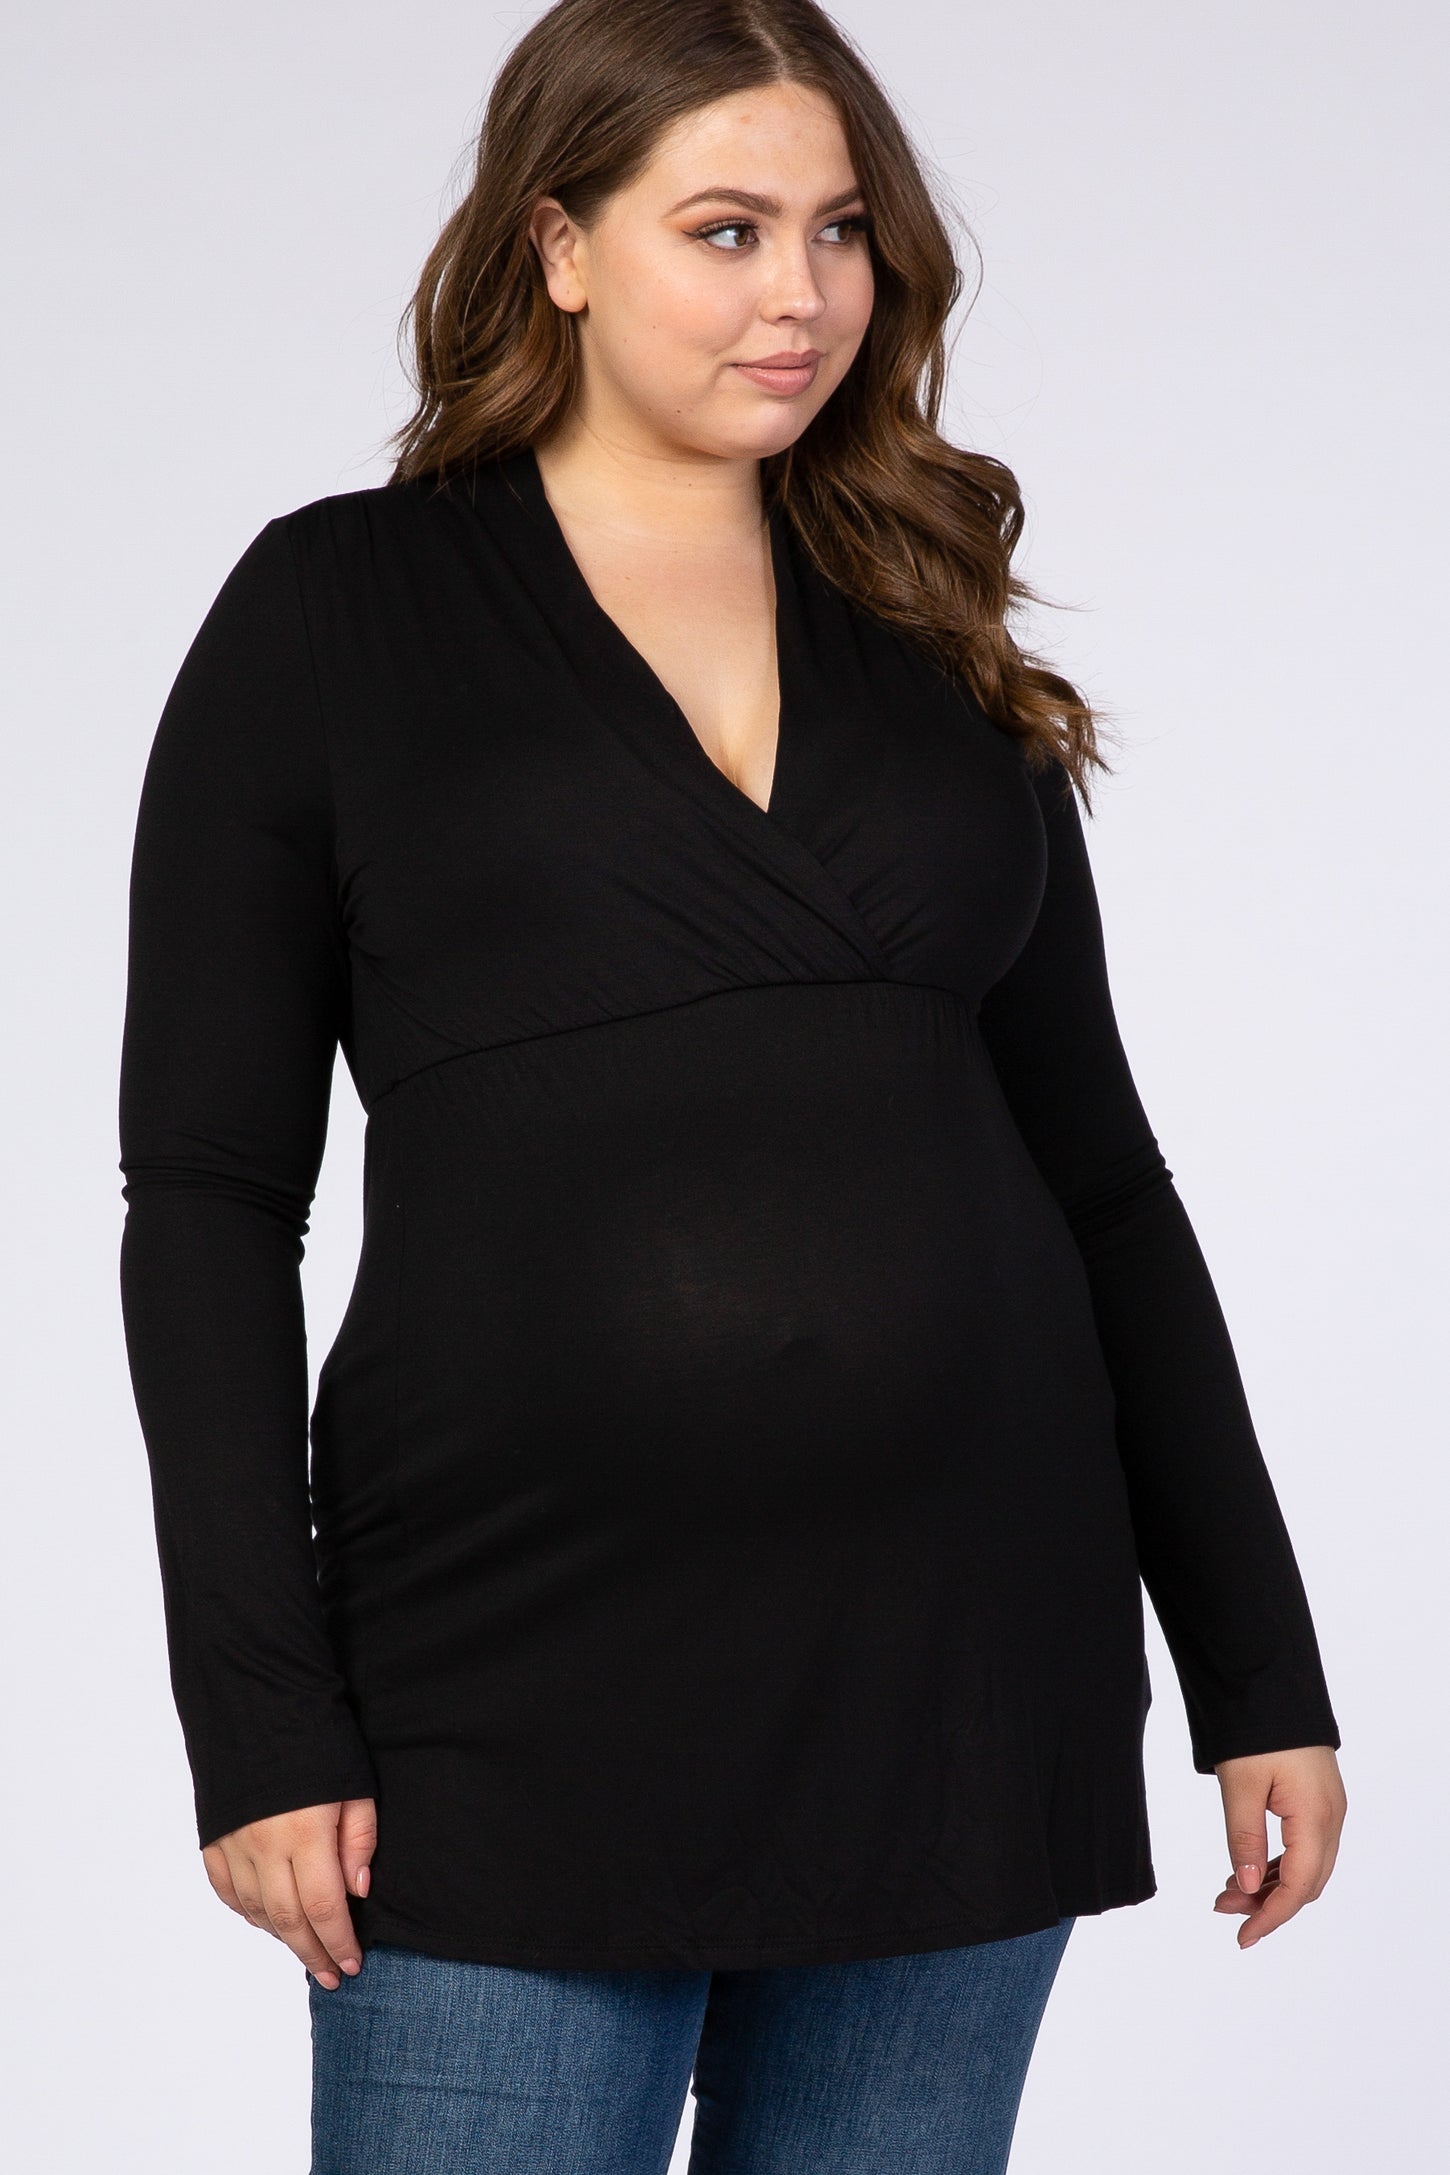 PinkBlush Black Long Sleeve Plus Maternity/Nursing Wrap Top